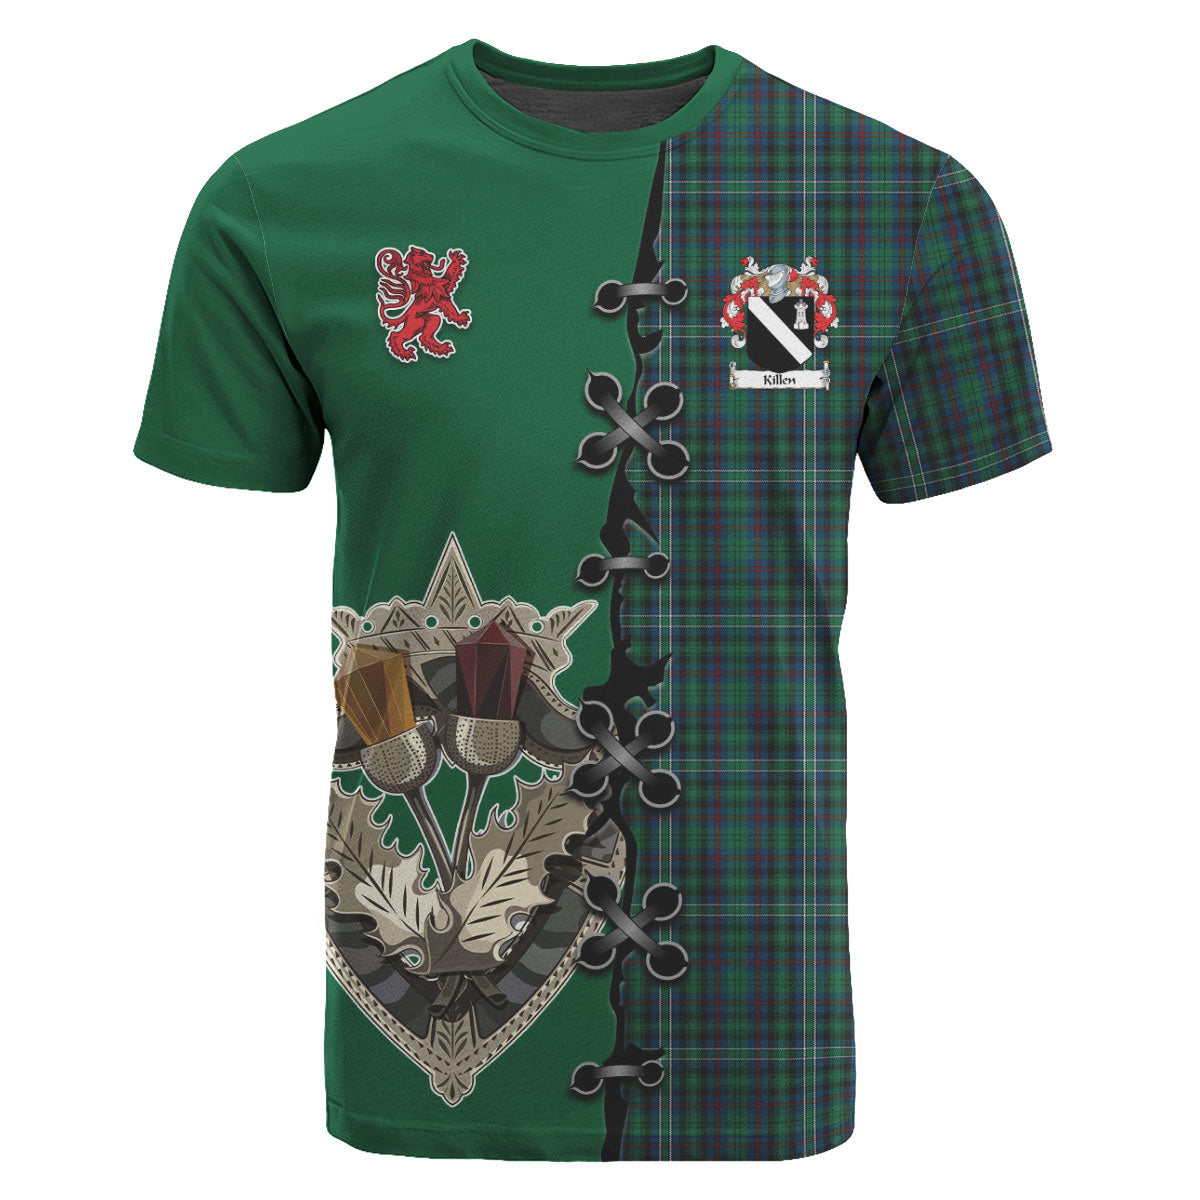 Killen Tartan T-shirt - Lion Rampant And Celtic Thistle Style